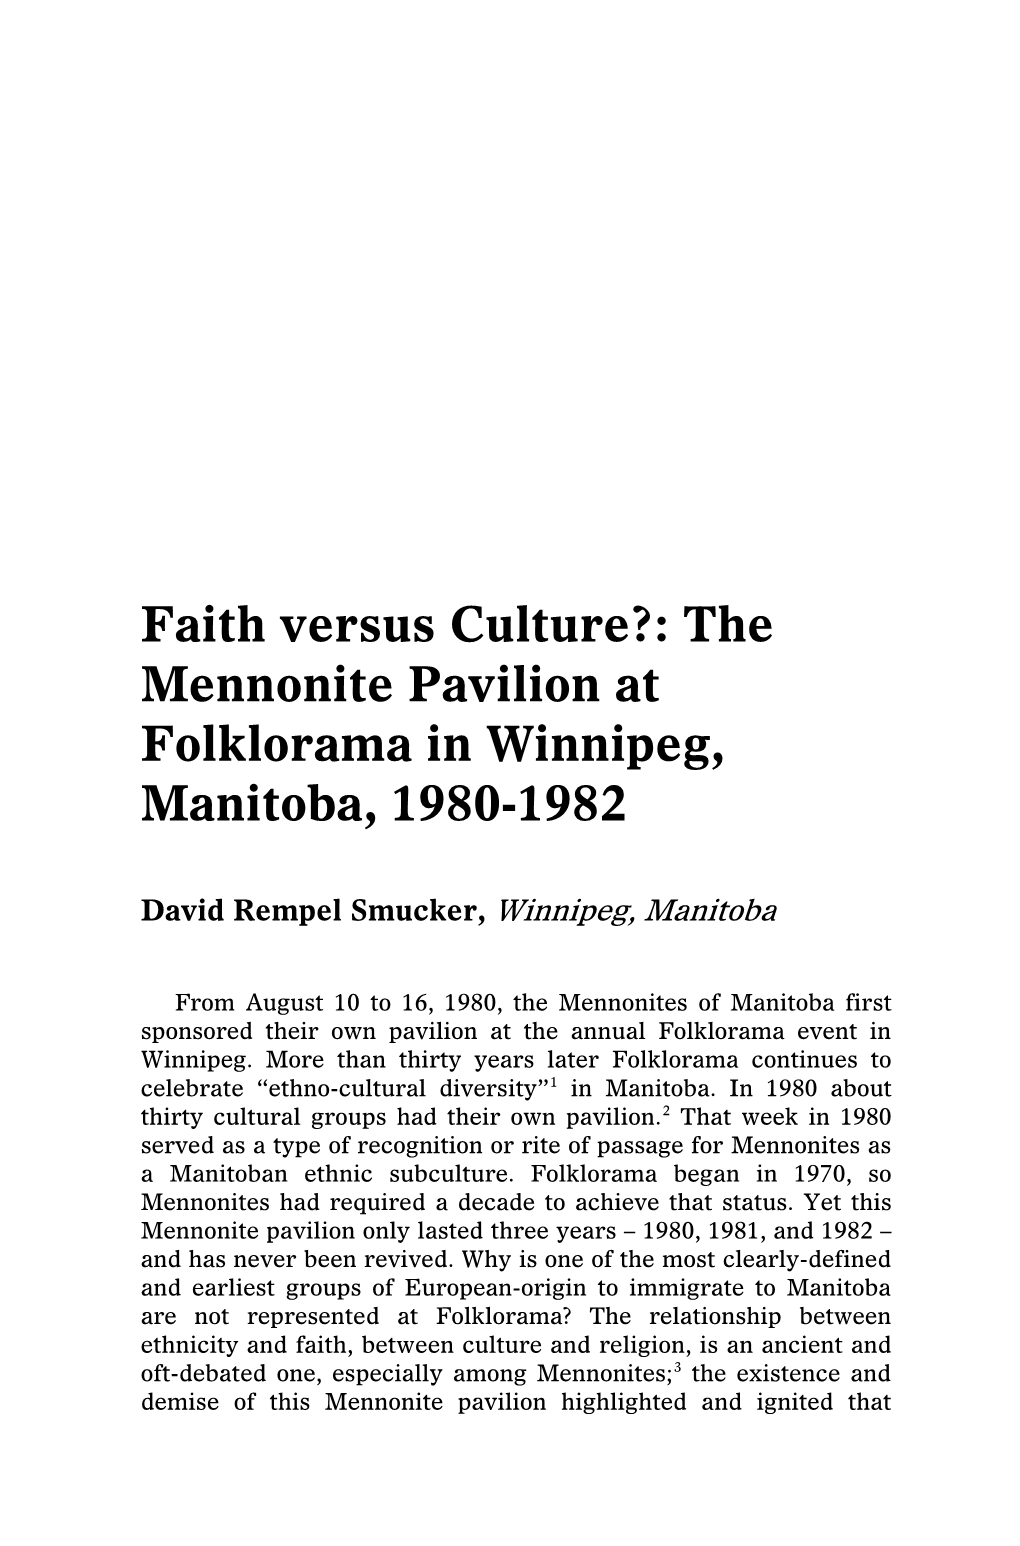 The Mennonite Pavilion at Folklorama in Winnipeg, Manitoba, 1980-1982